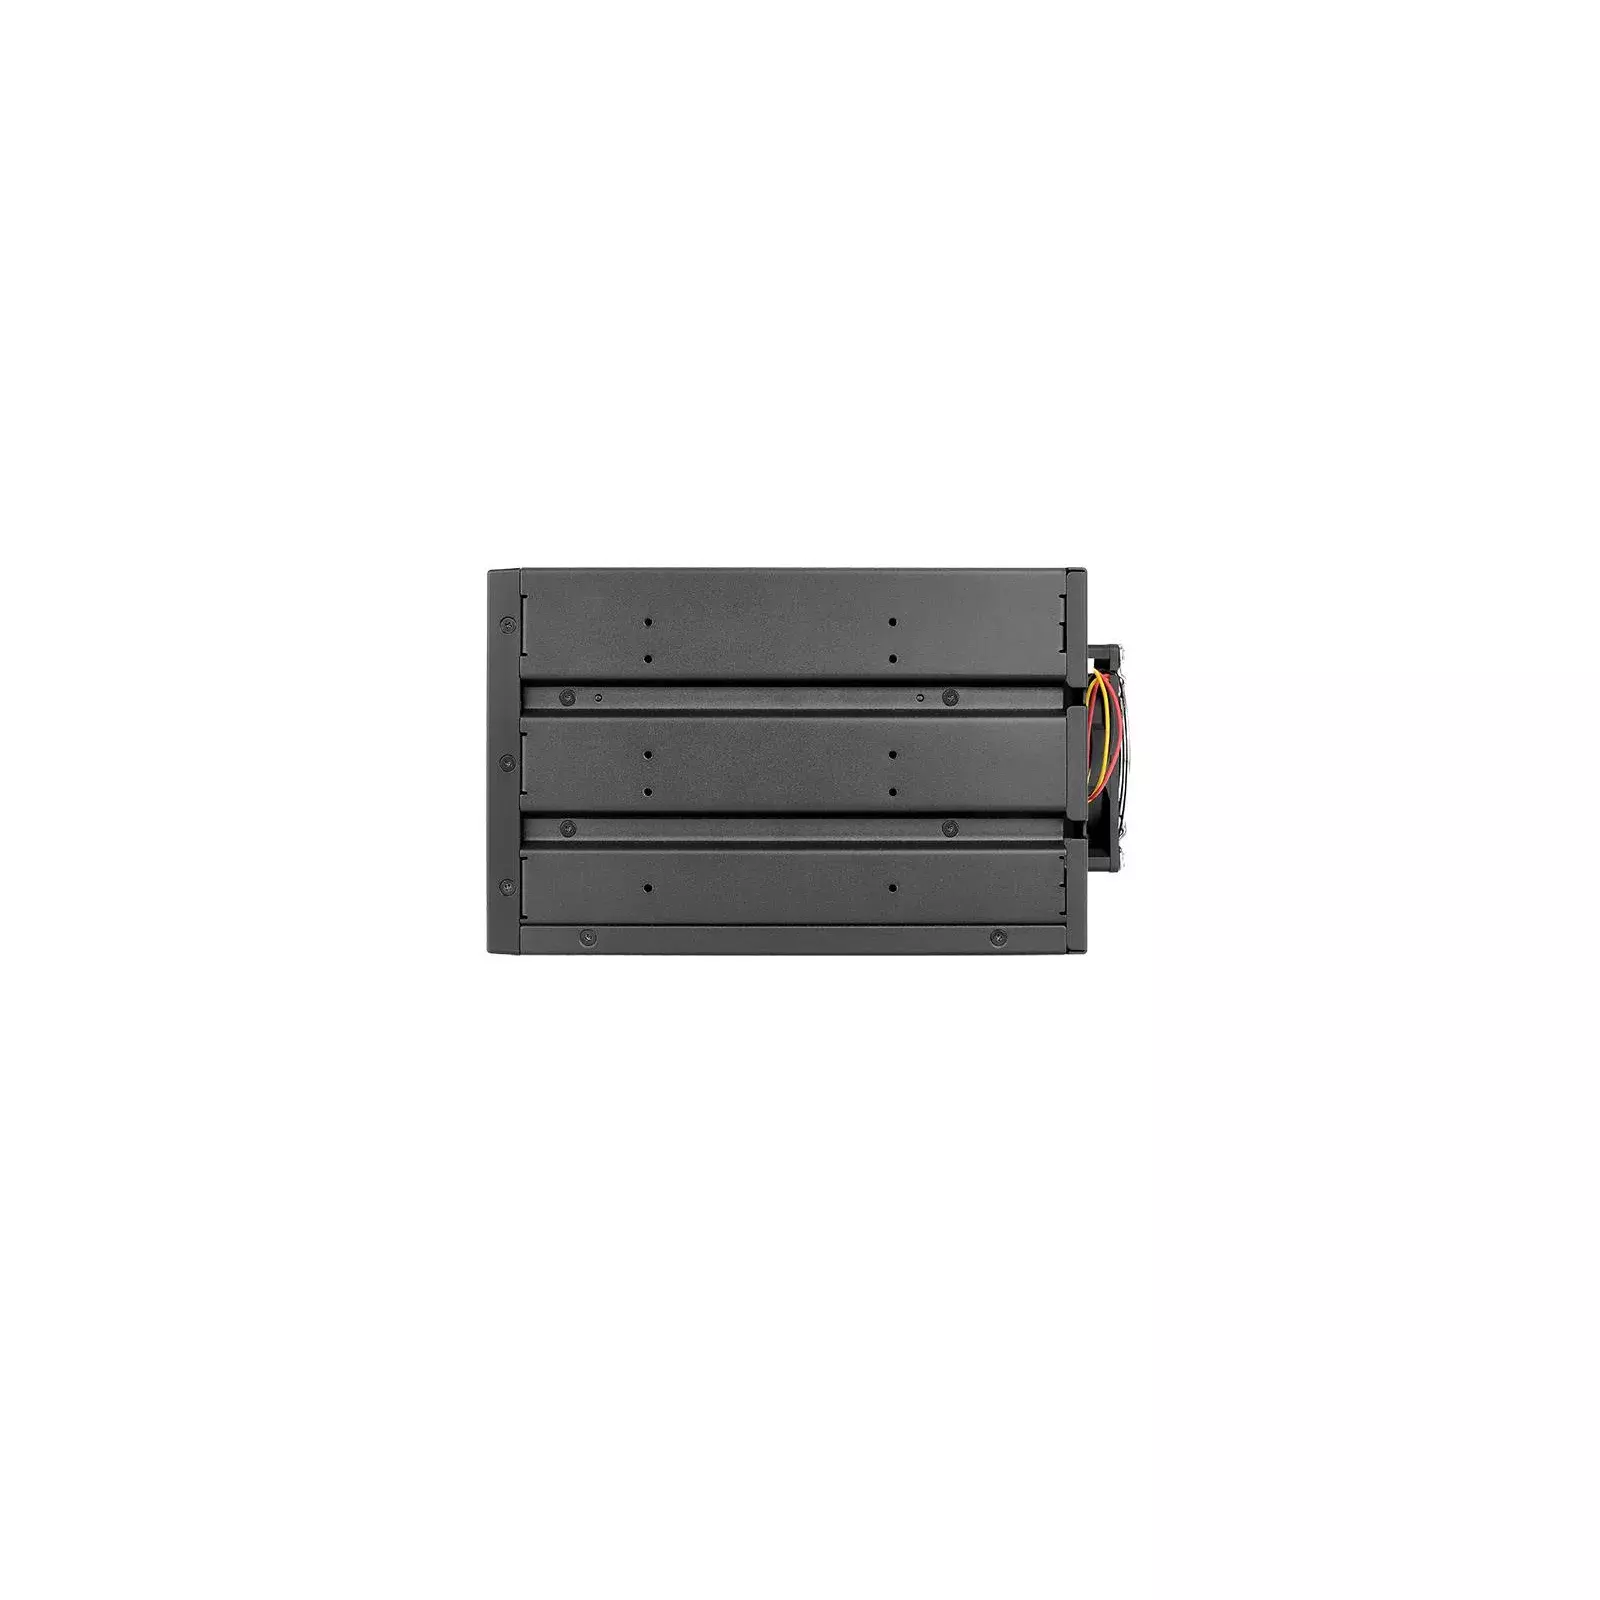 Max 3504 SATA HDD Rack